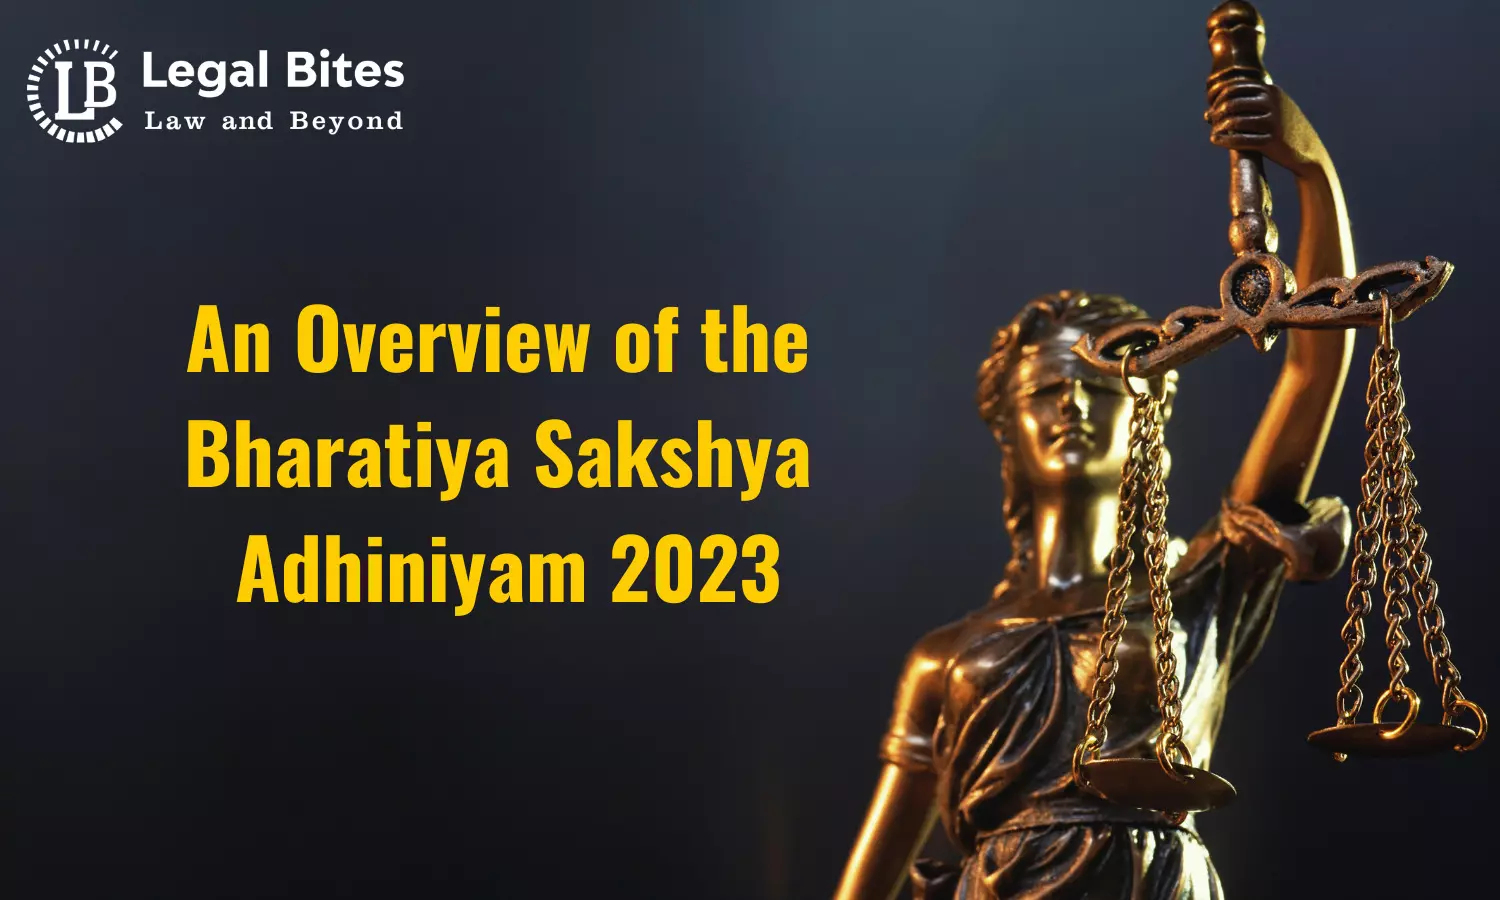 An Overview of the Bharatiya Sakshya Adhiniyam 2023